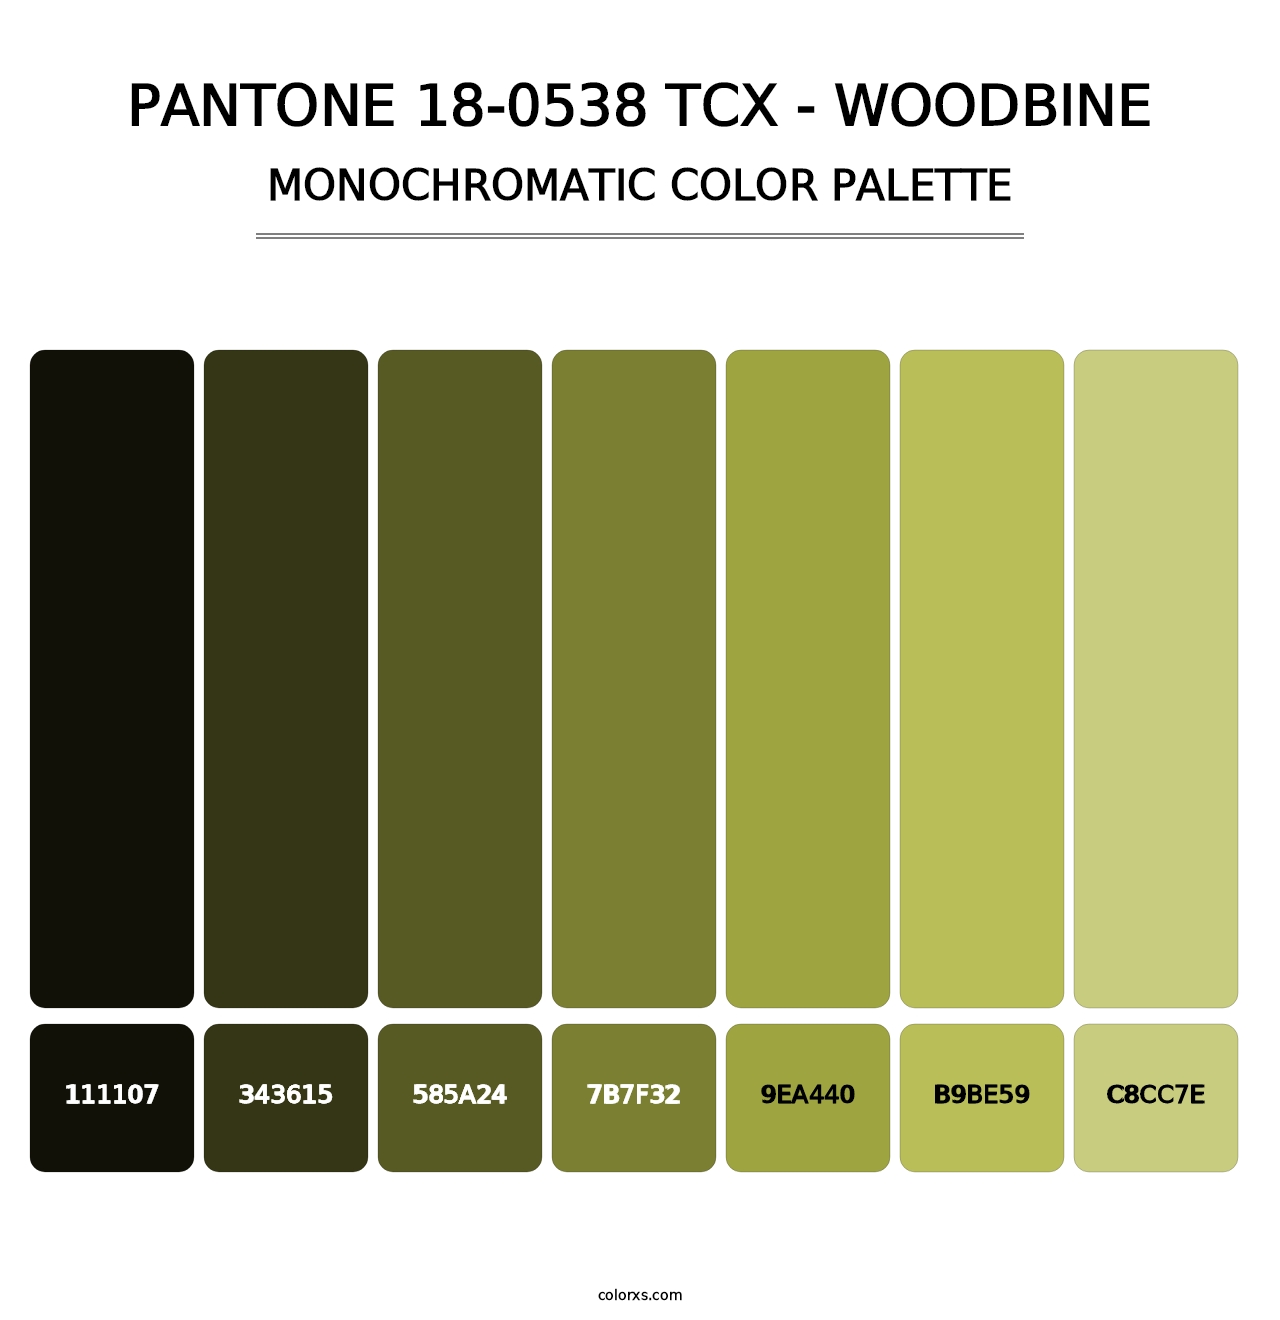 PANTONE 18-0538 TCX - Woodbine - Monochromatic Color Palette